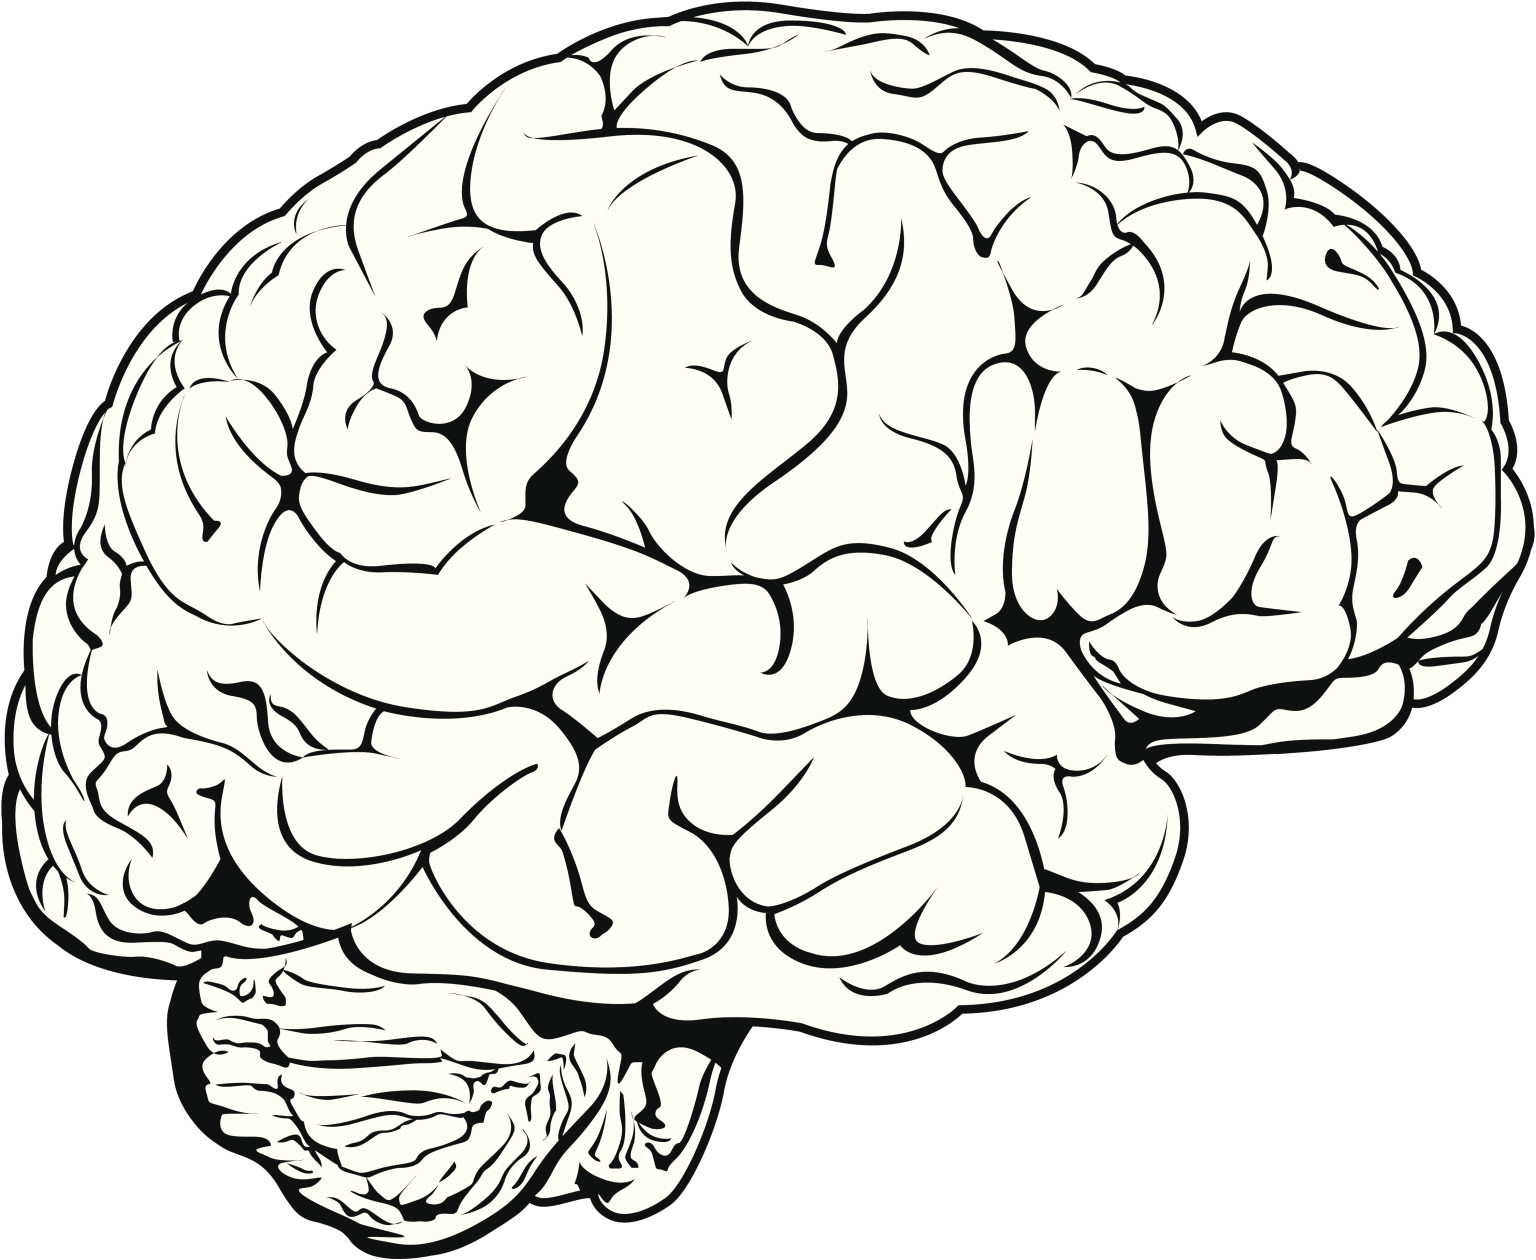 Brain pdf